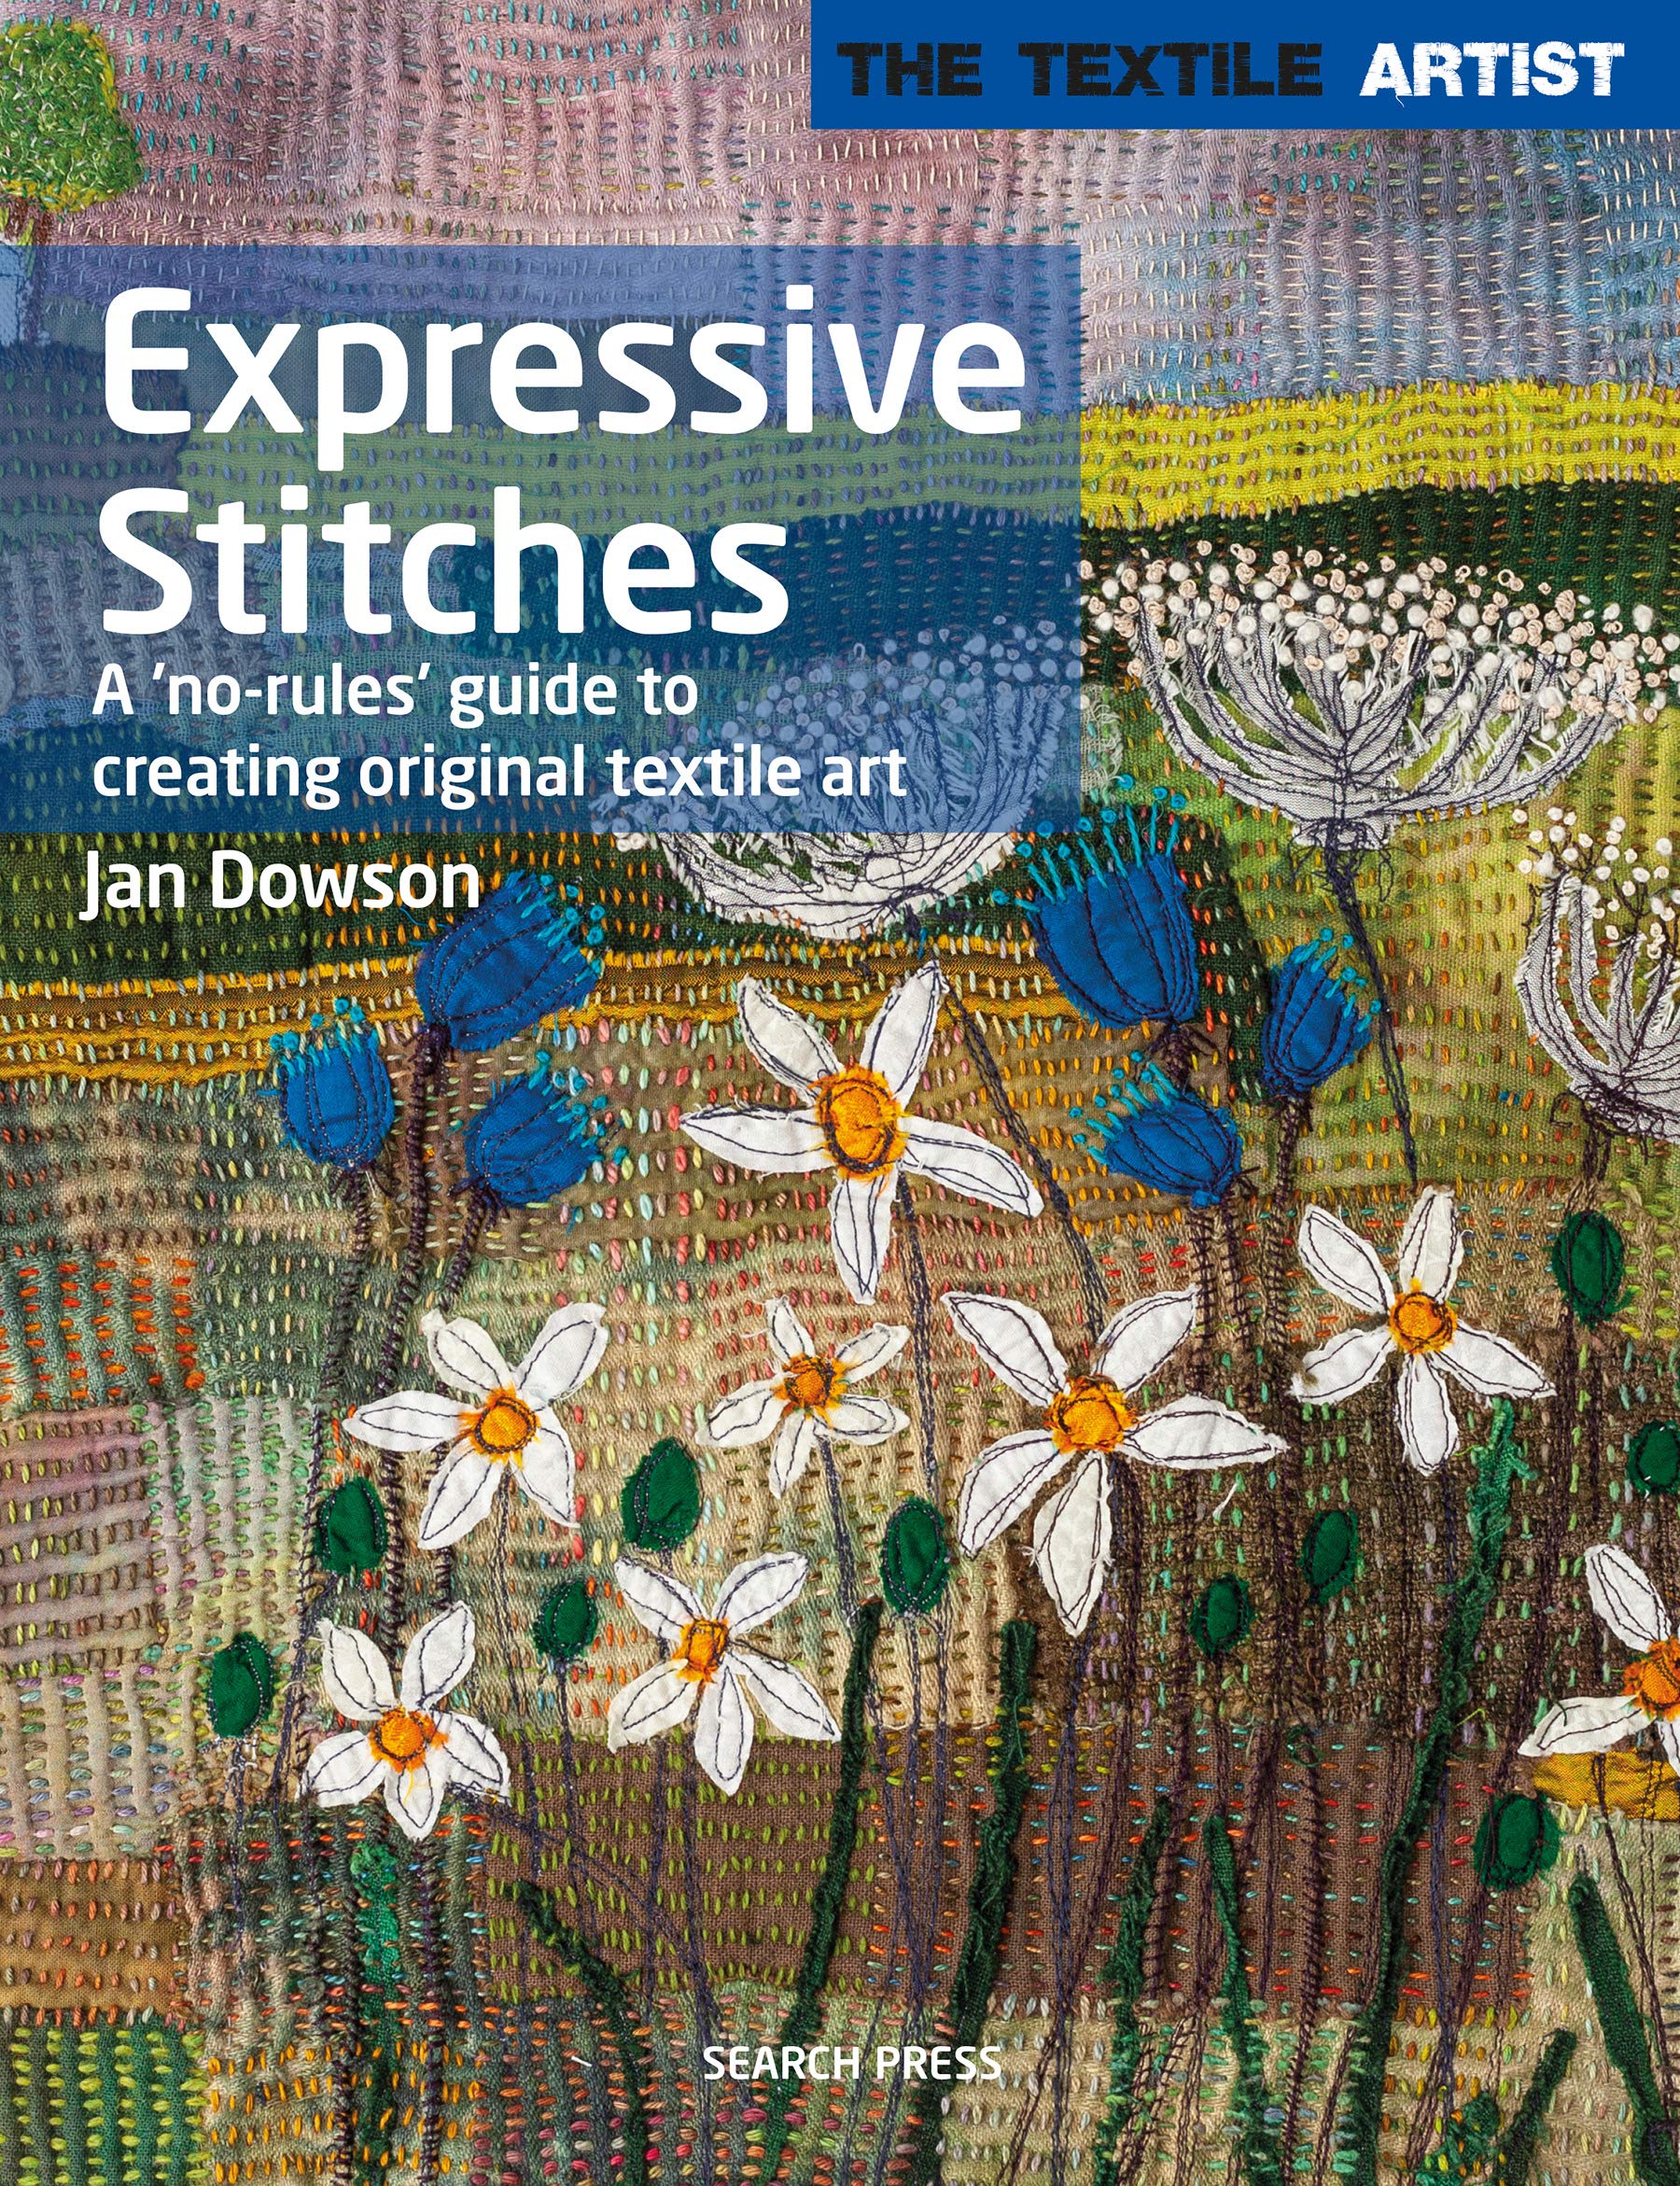 The Textile Artist: Expressive Stitches